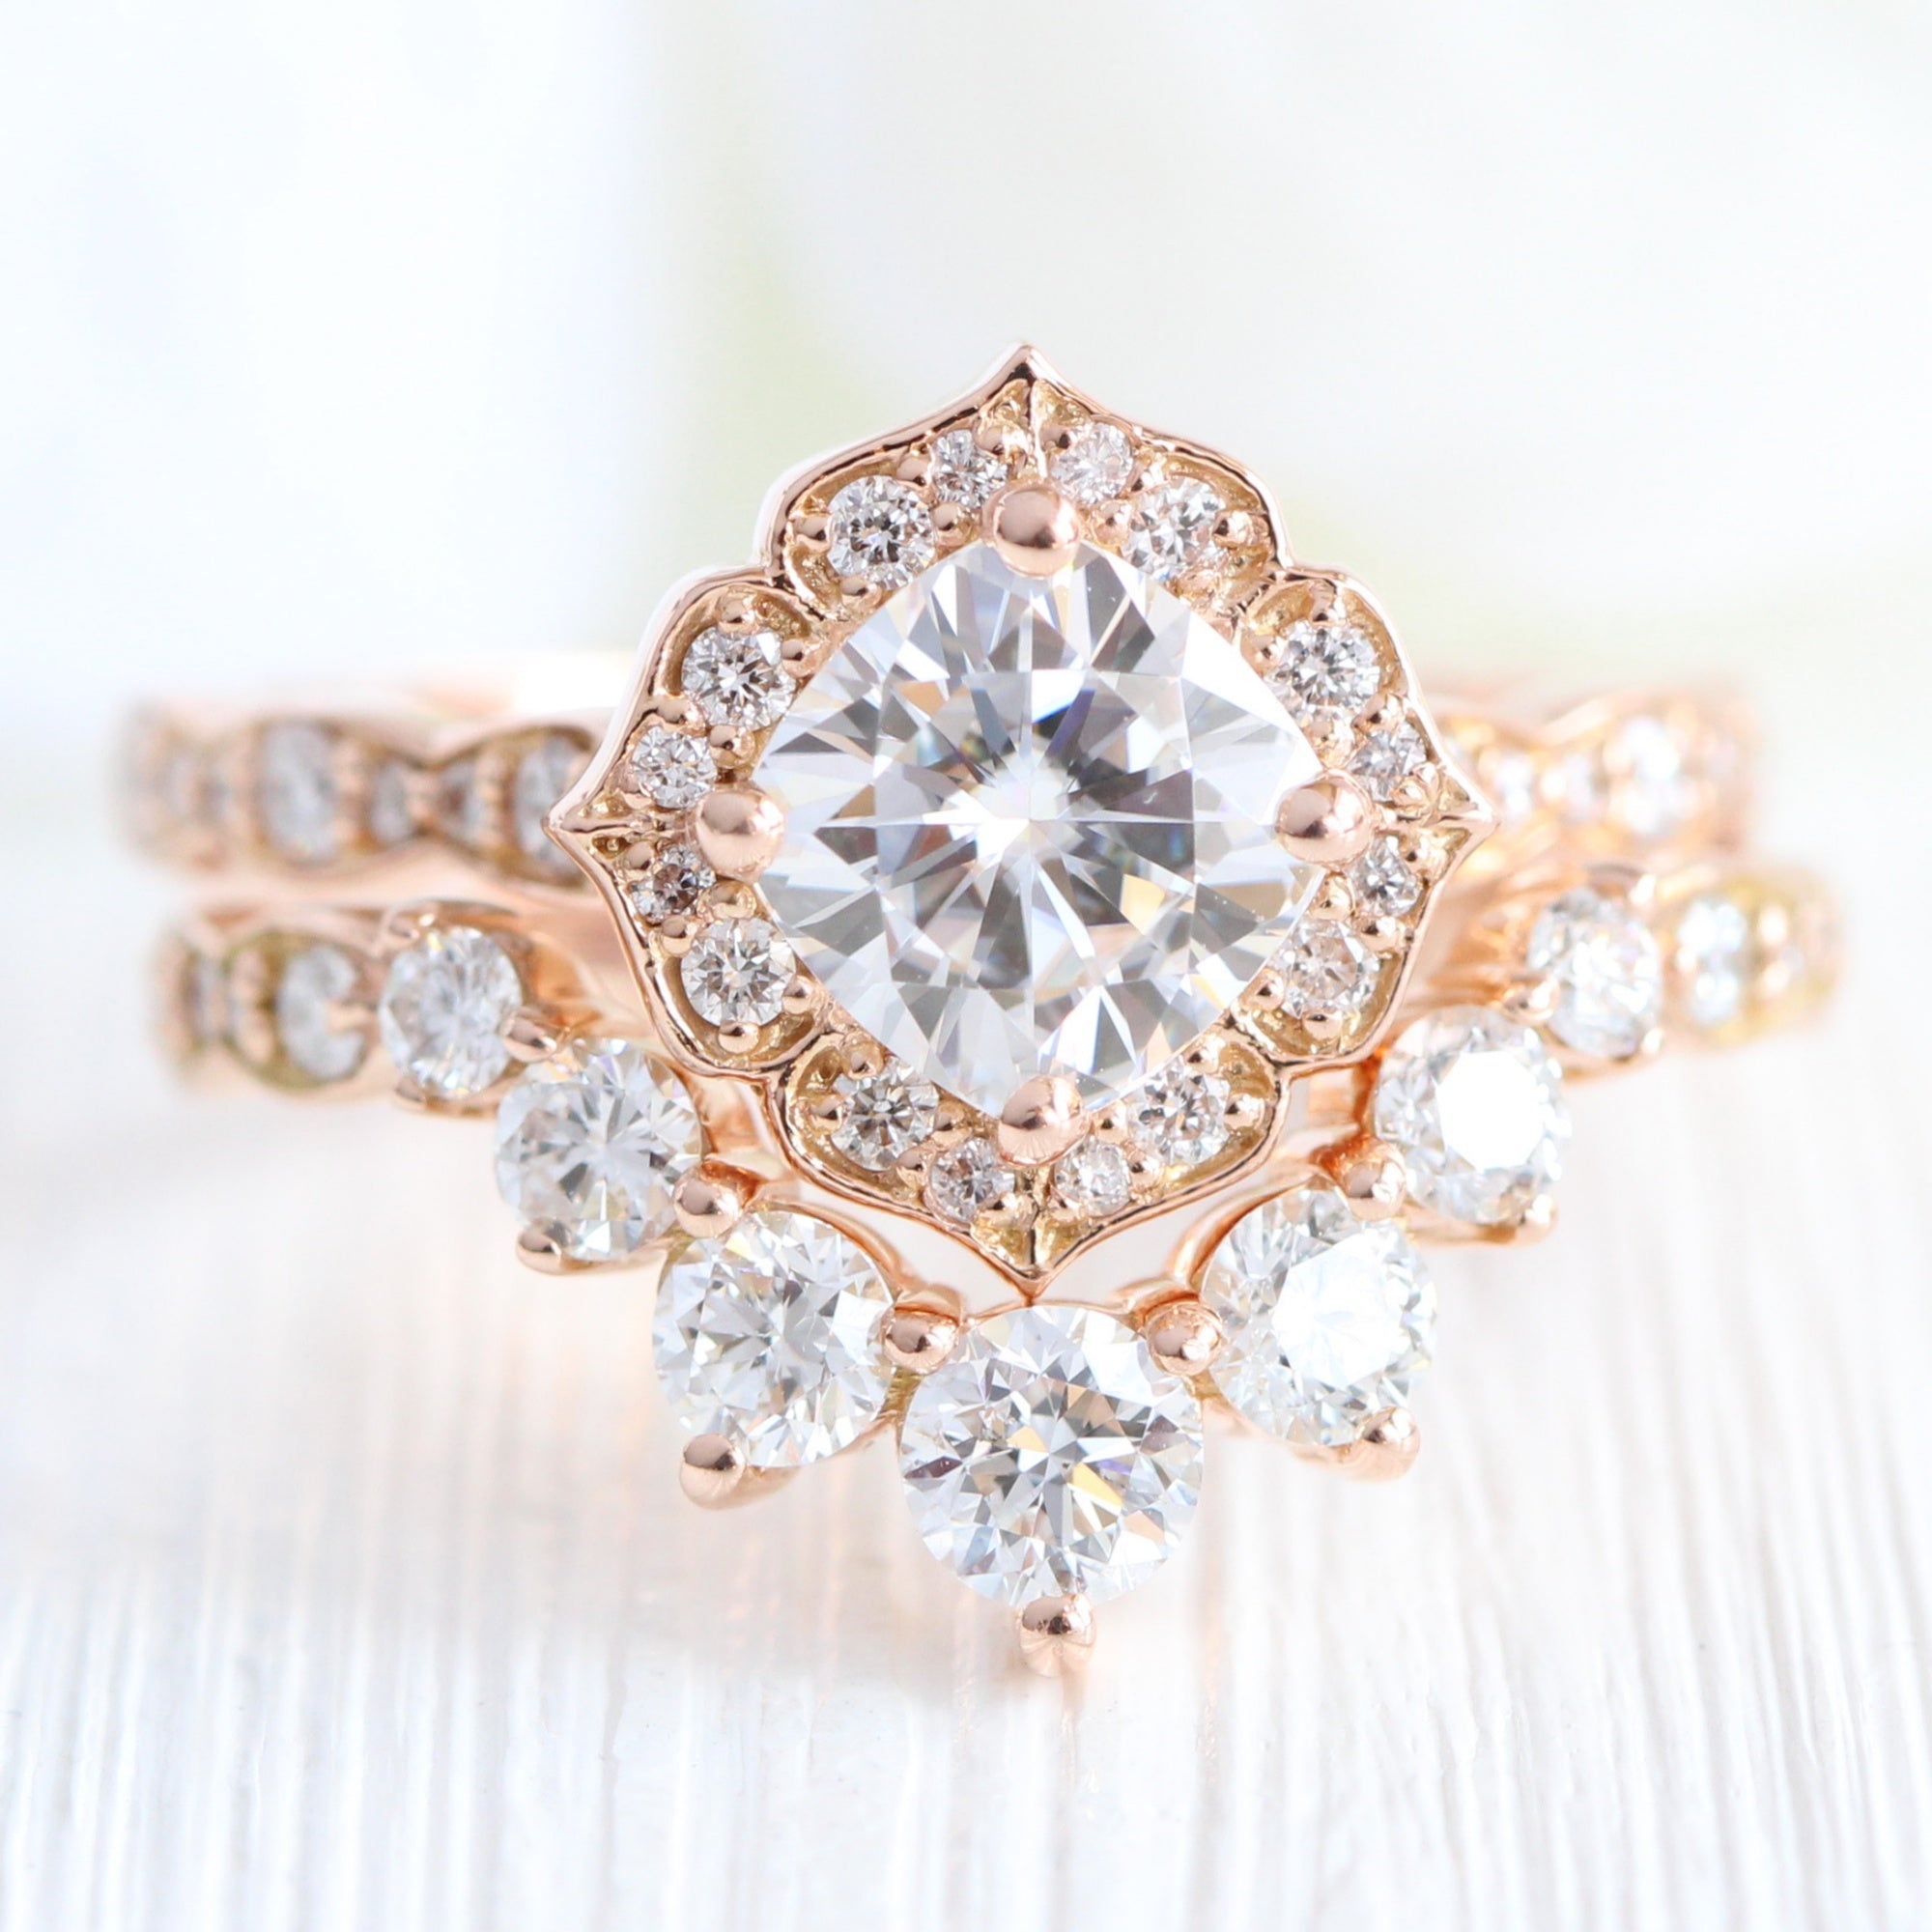 cushion morganite engagement ring rose gold vintage halo diamond ring la more design jewelry